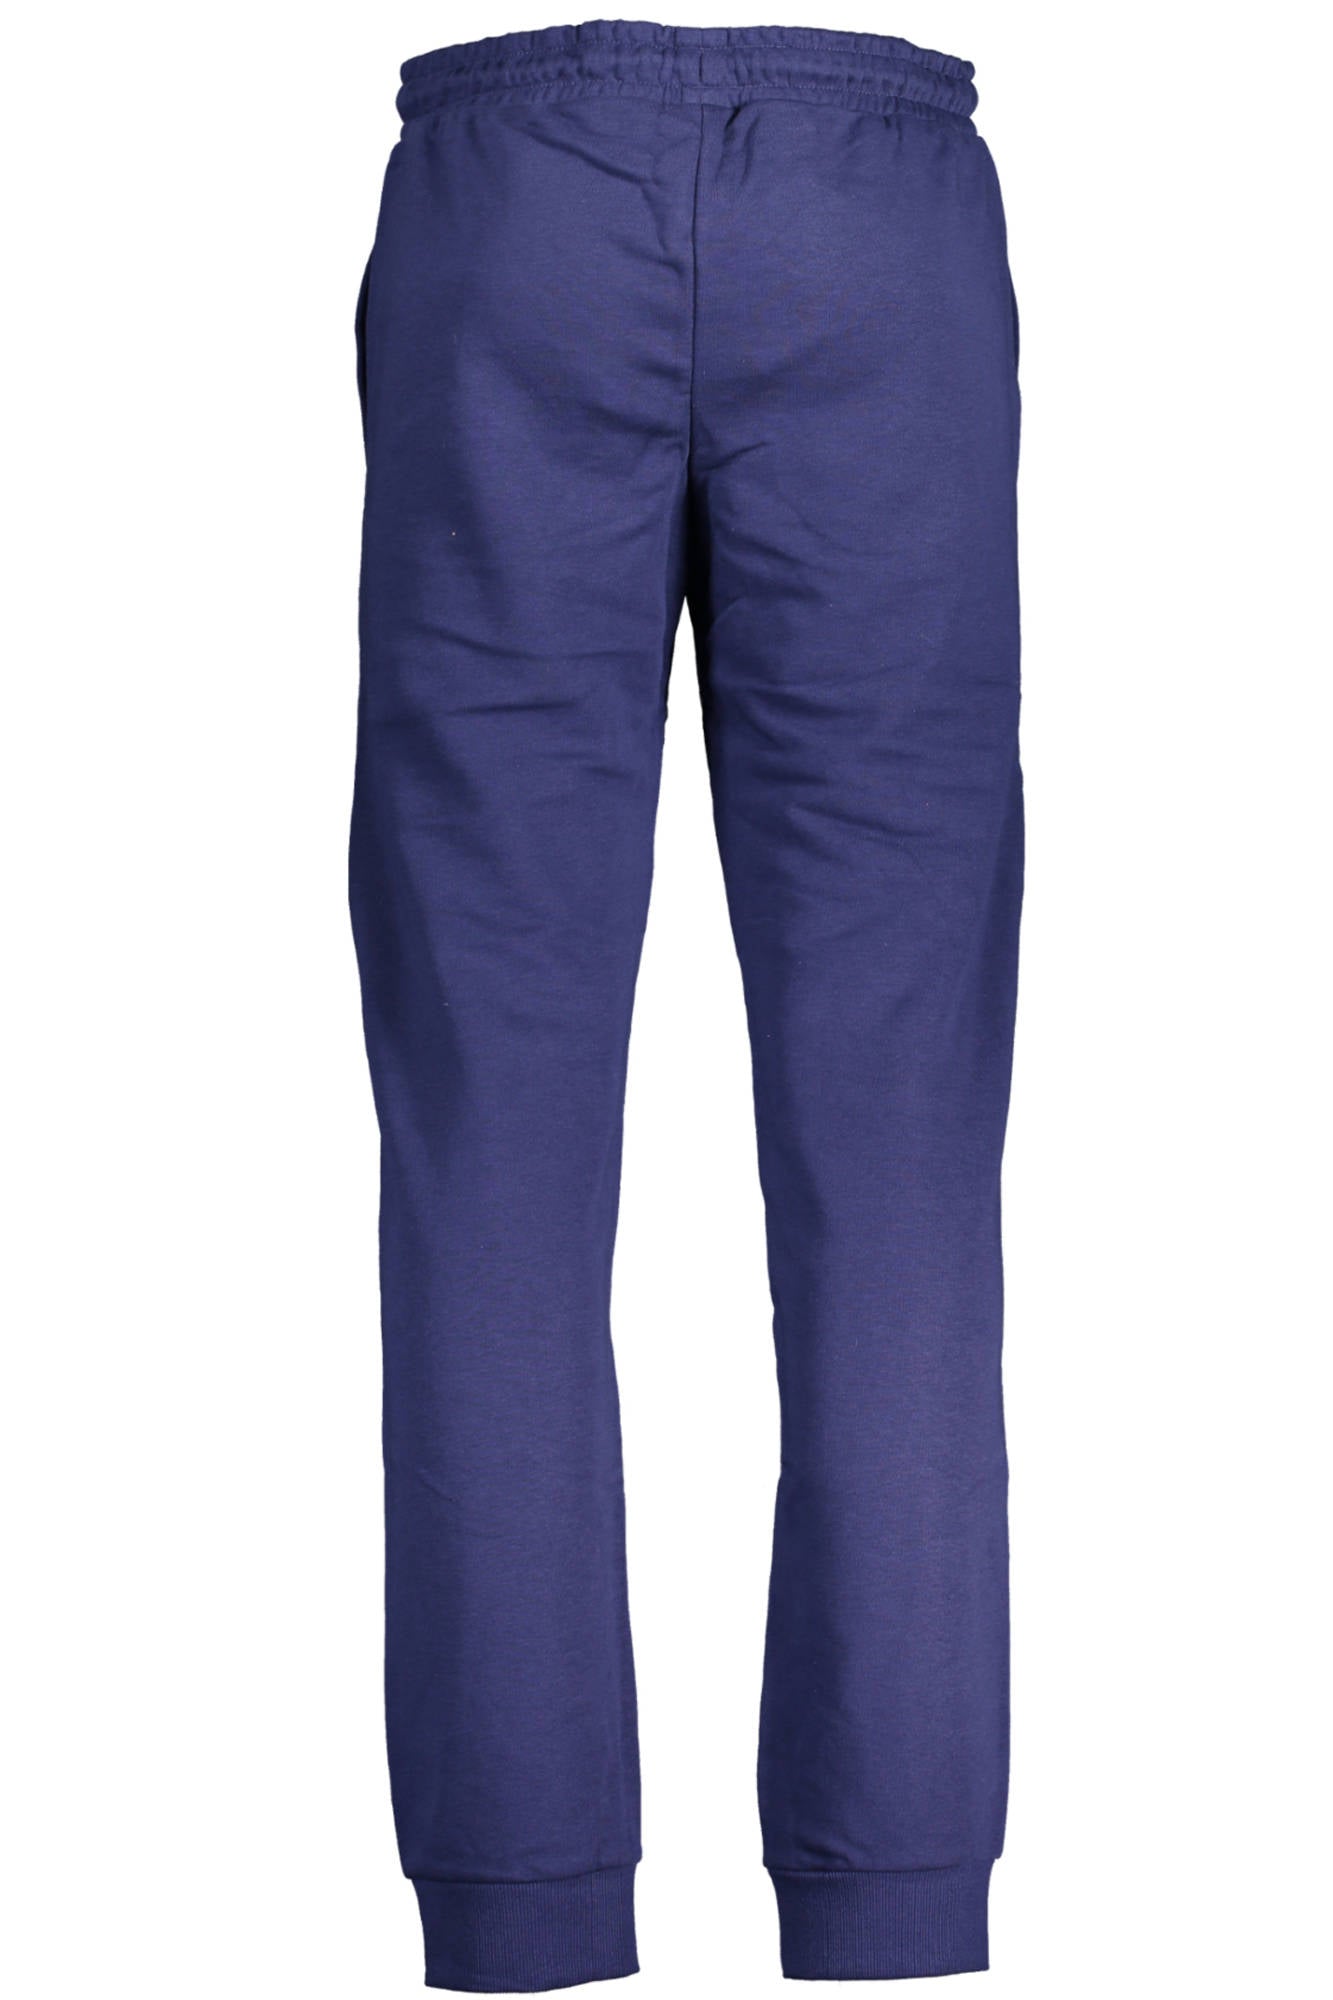 Fila Blue Cotton Jeans & Pant - Fizigo